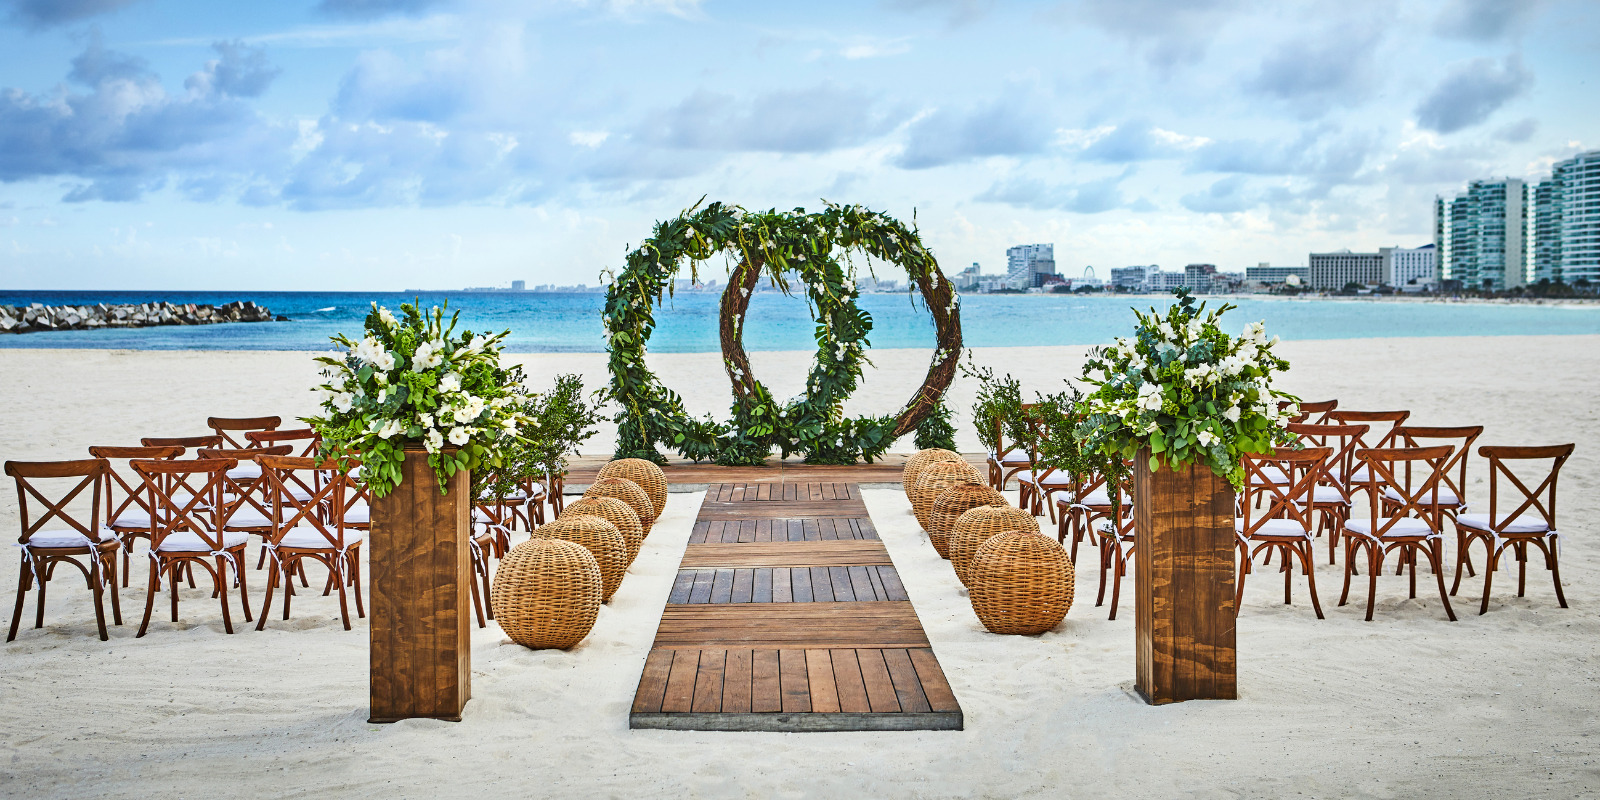 hyatt ziva cancun - destination wedding mexico 